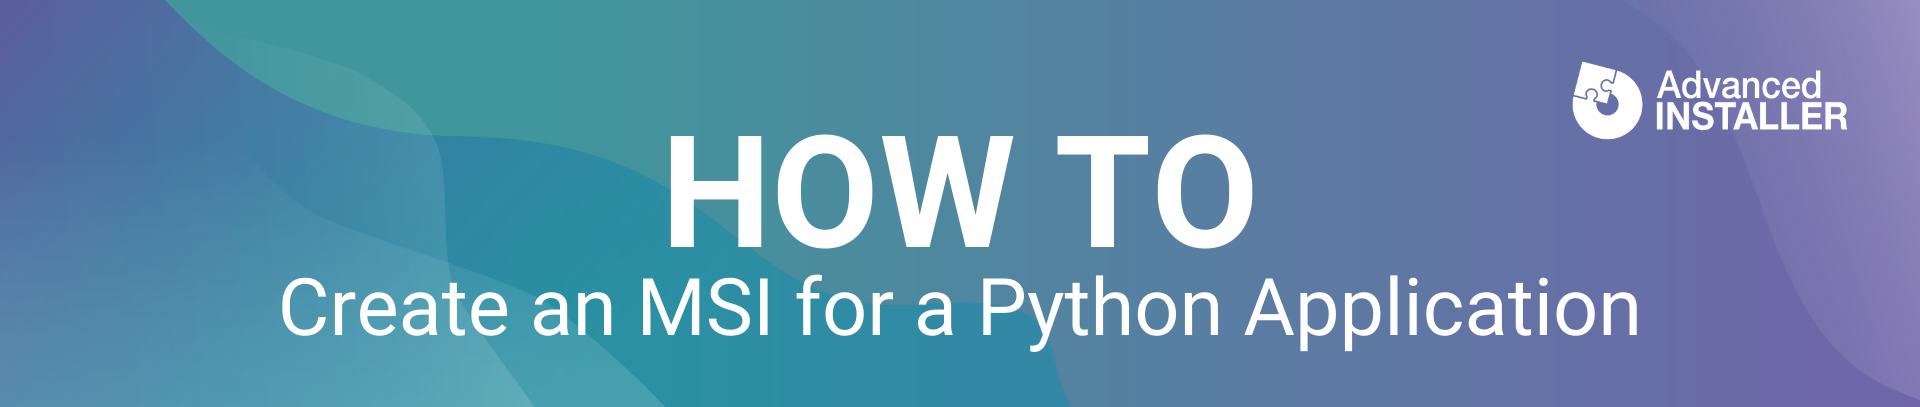 Msi for python app